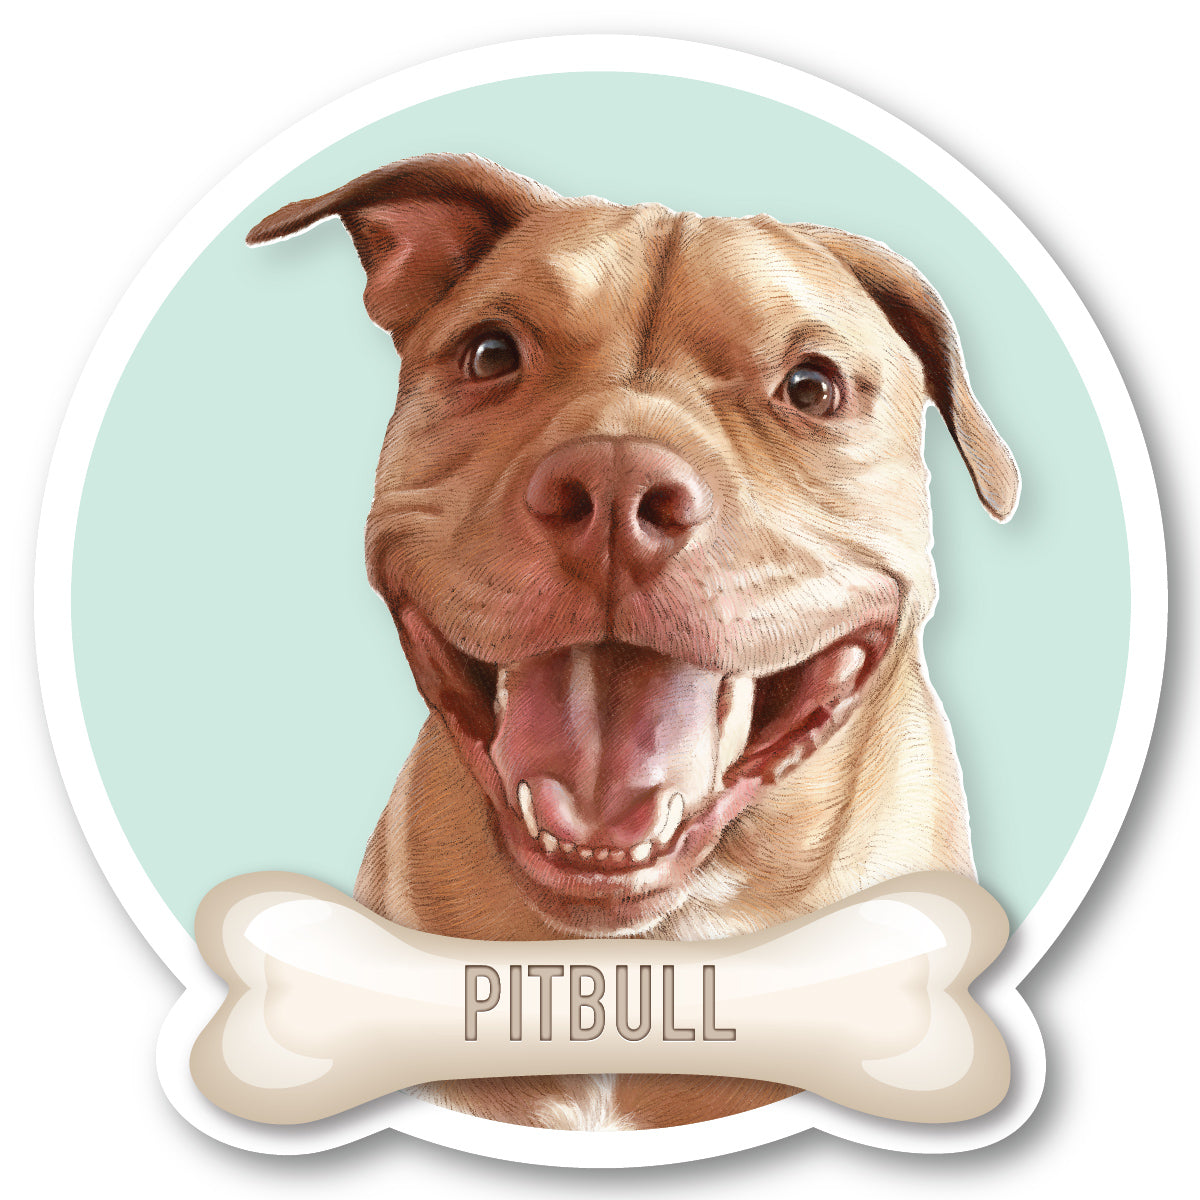 Pitbull Vinyl Sticker